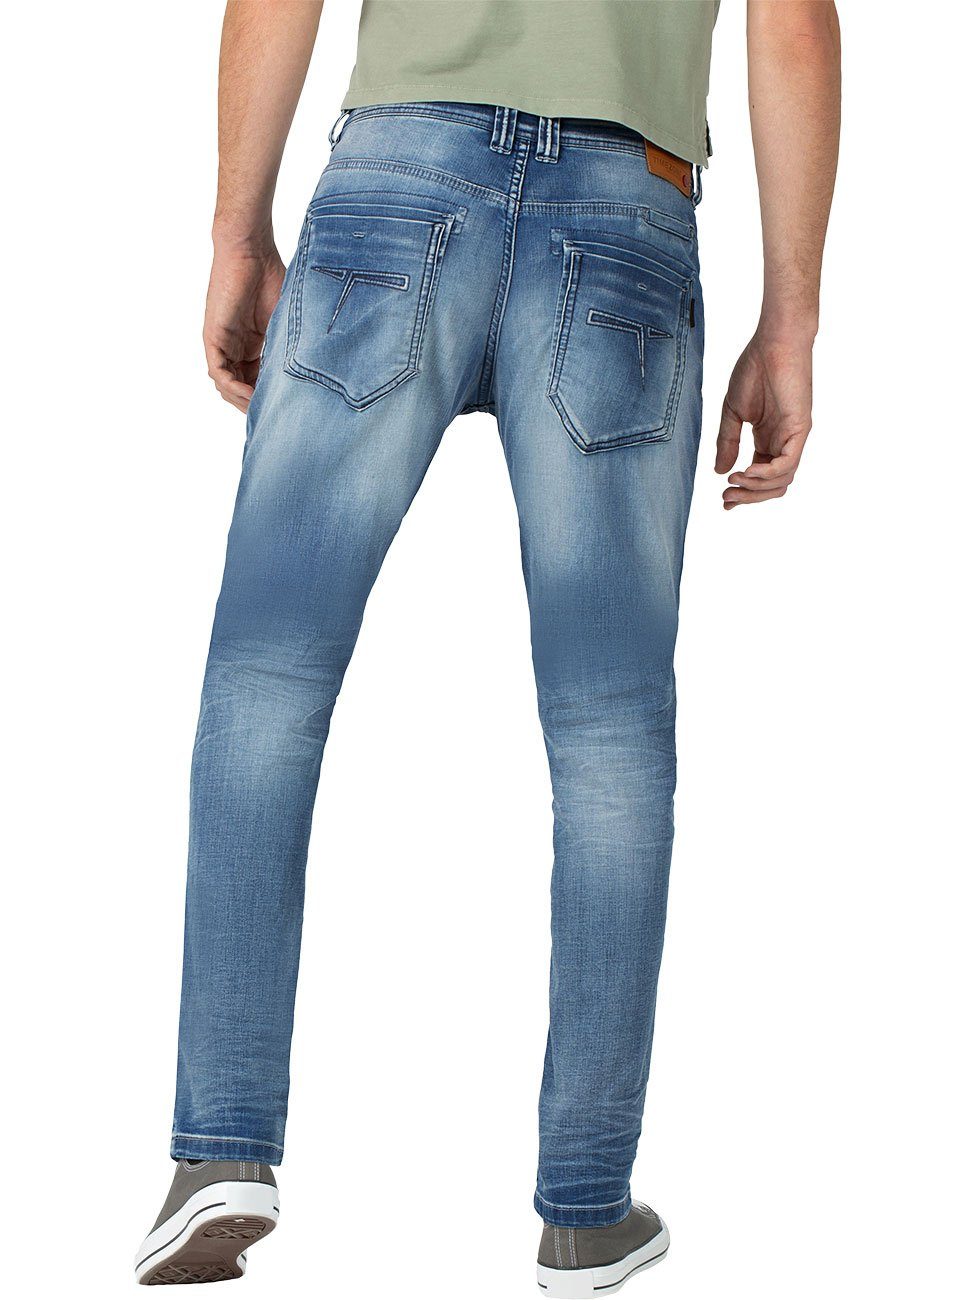 Jeanshose TIMEZONE Stretch GerritTZ mit Straight-Jeans